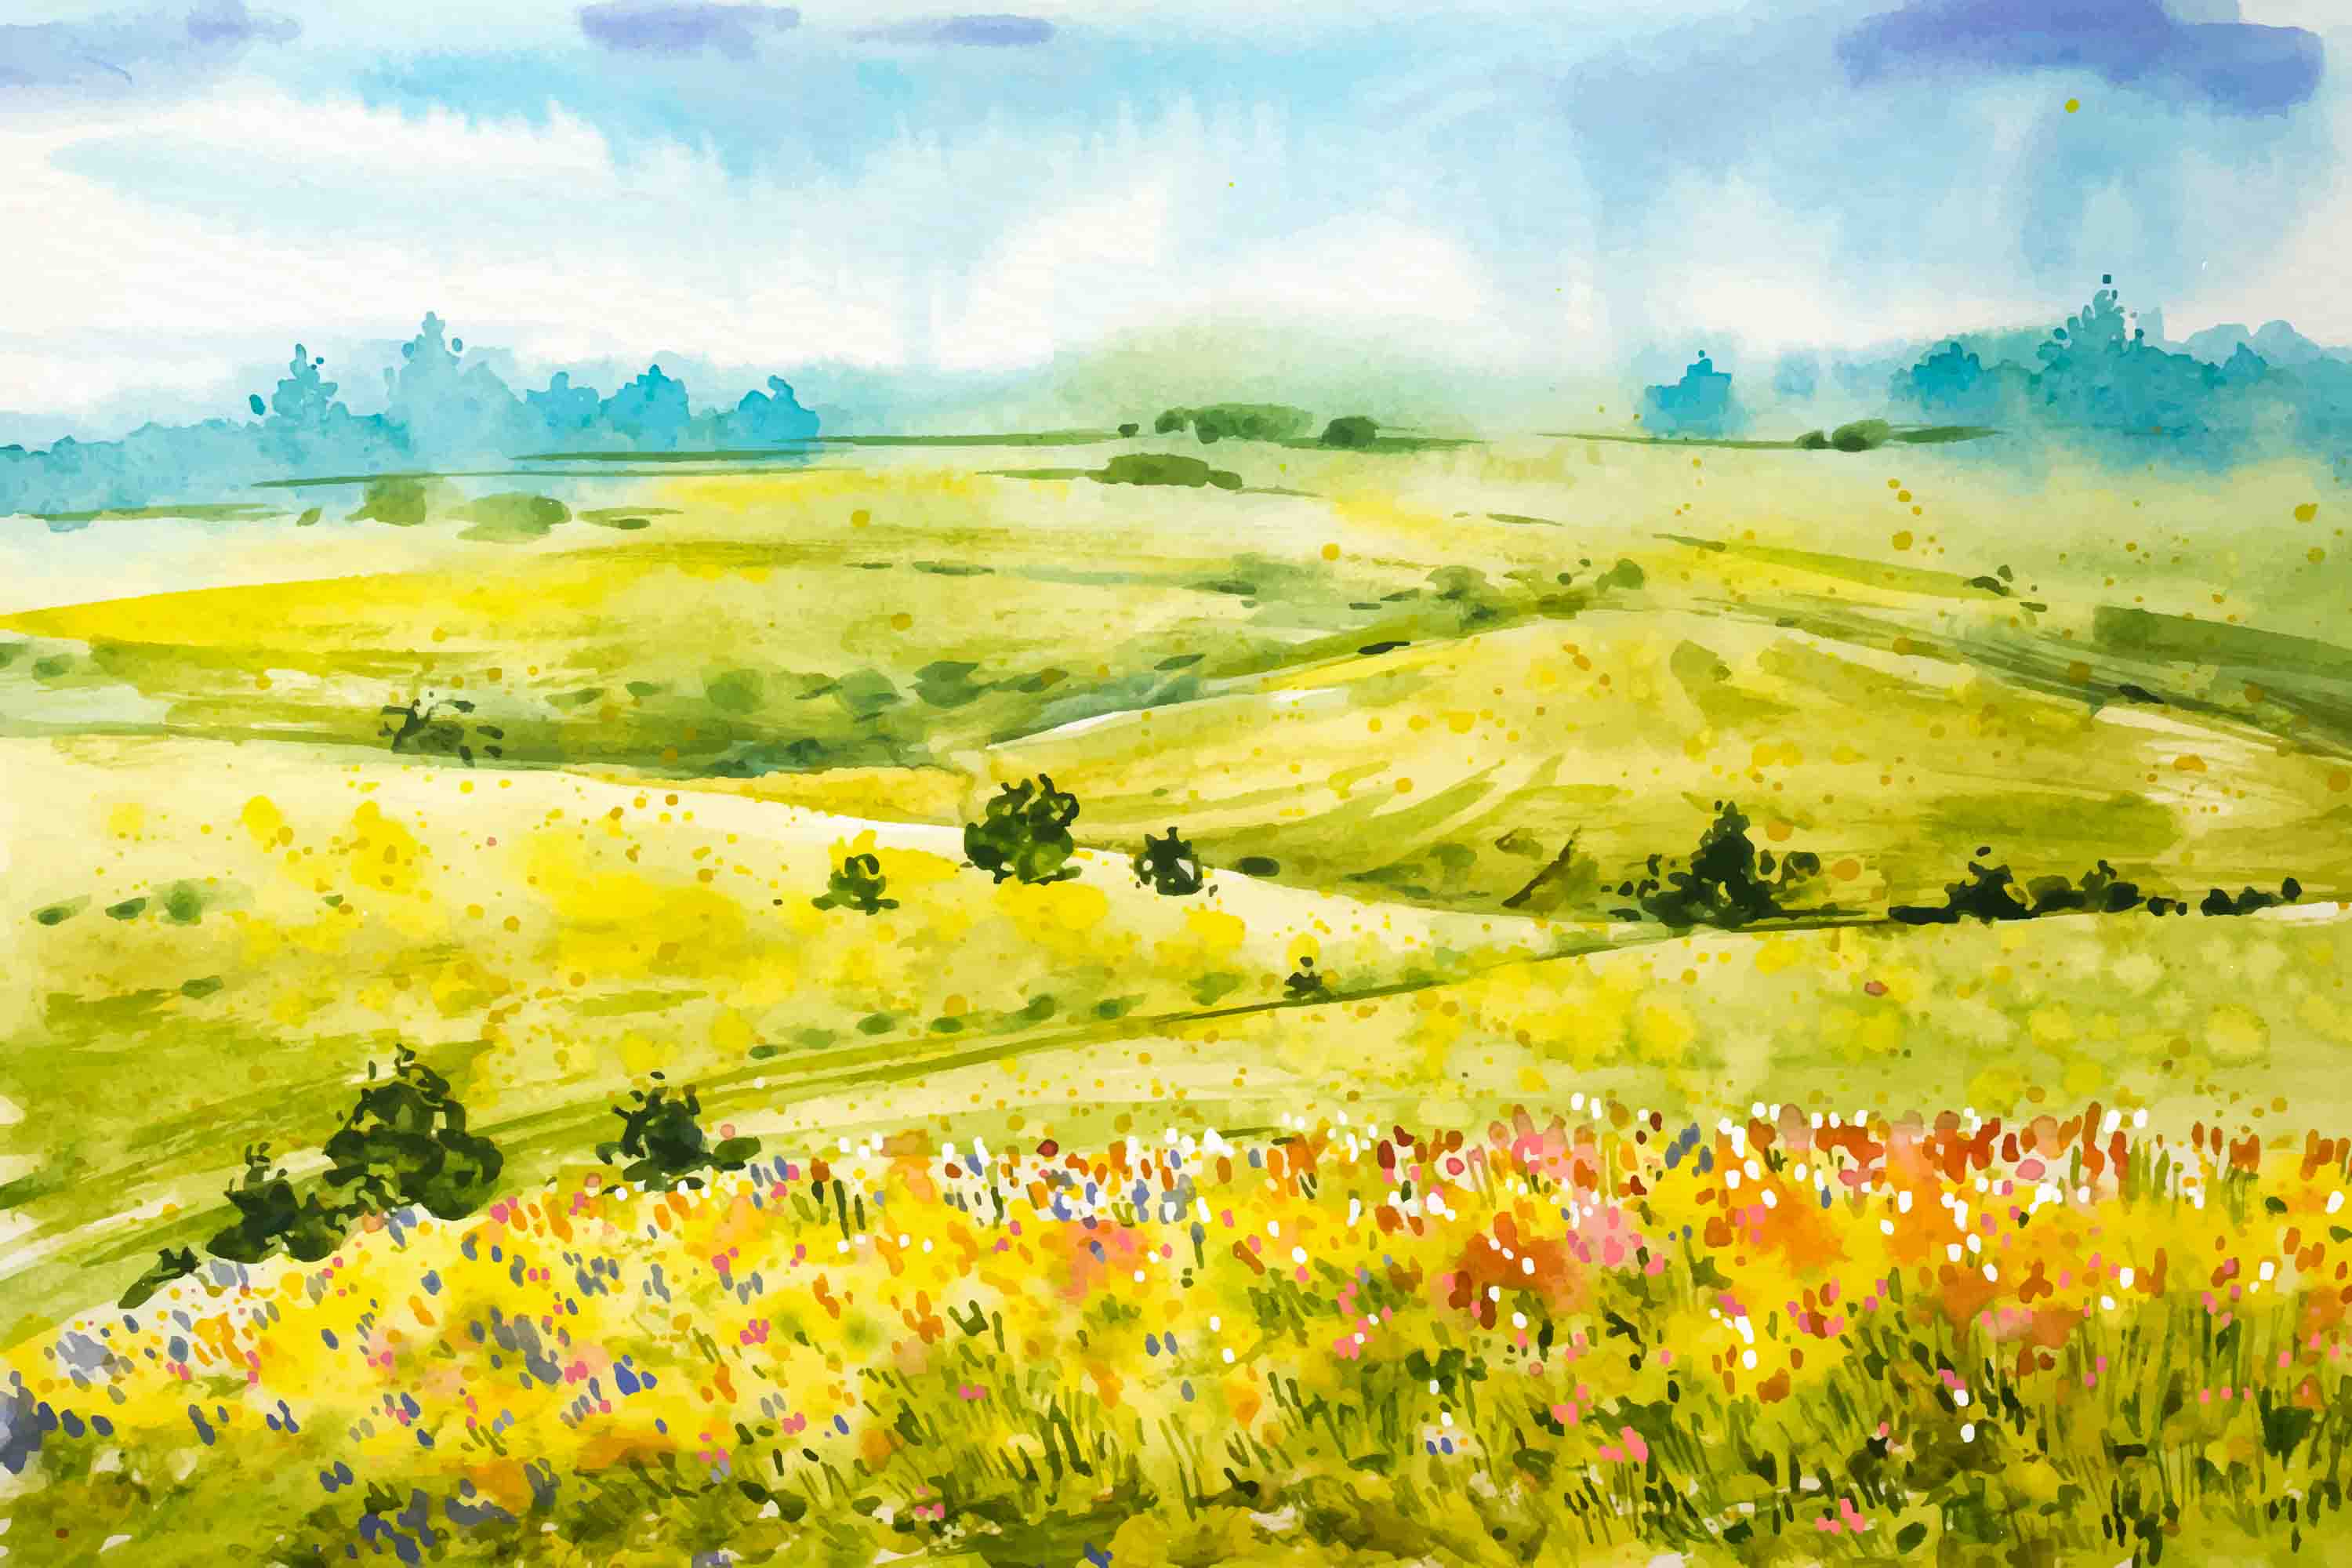 3D Oil Painting Floral Tree Grassland Cloud Sky Wall Mural Wallpaper YXL 157